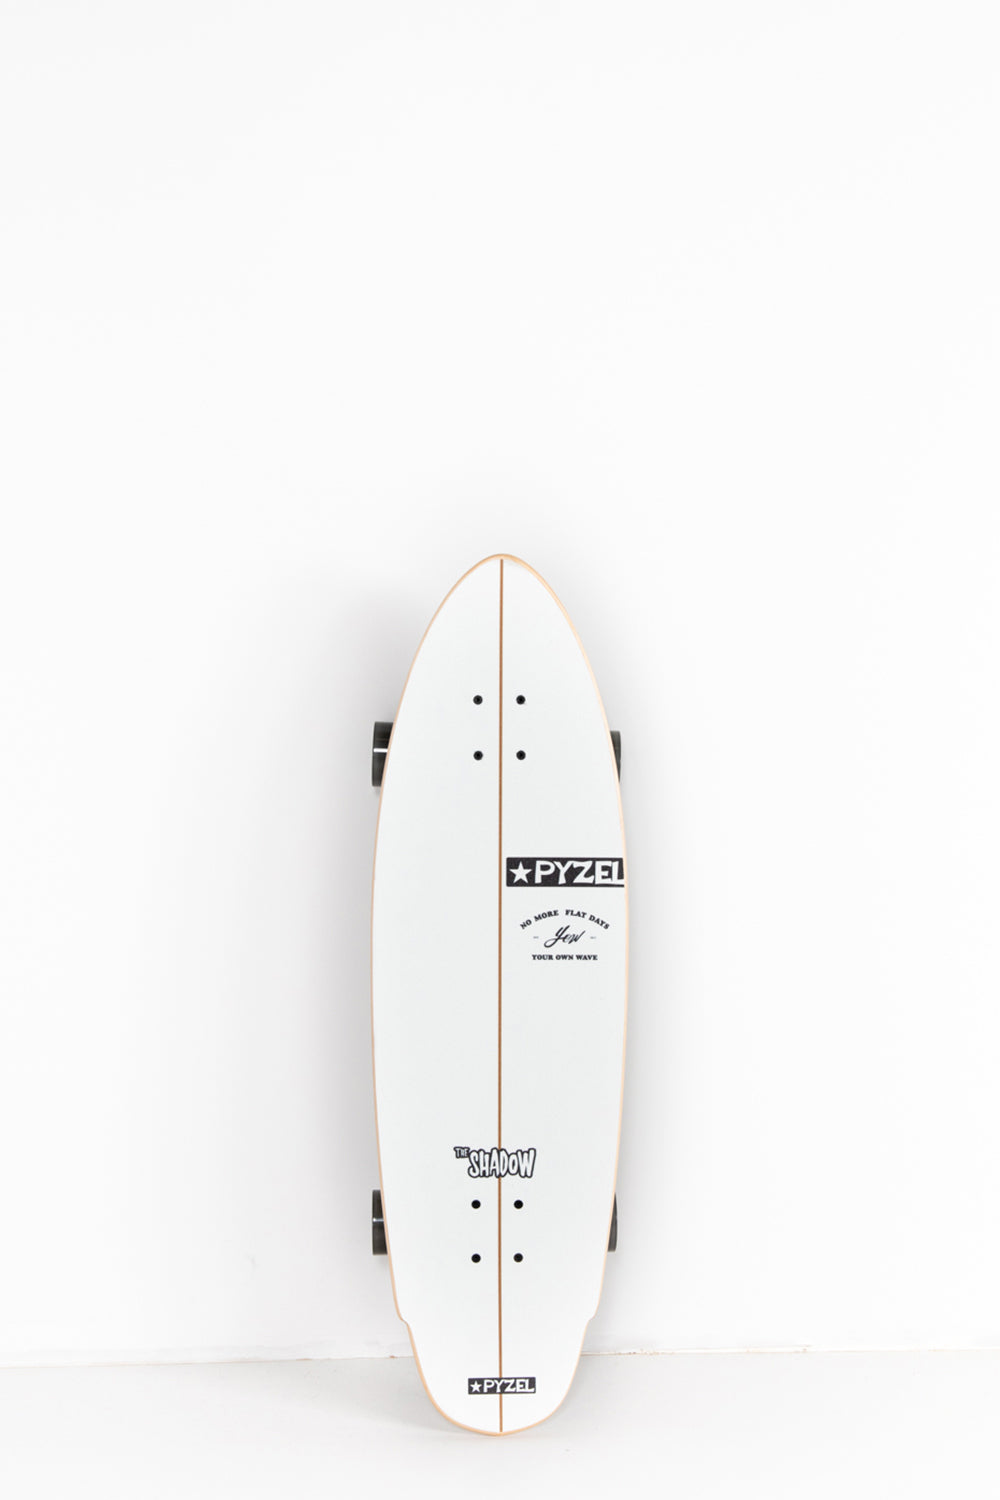 Pukas Surf Shop - YOW - SHADOW 33.5 PYZEL